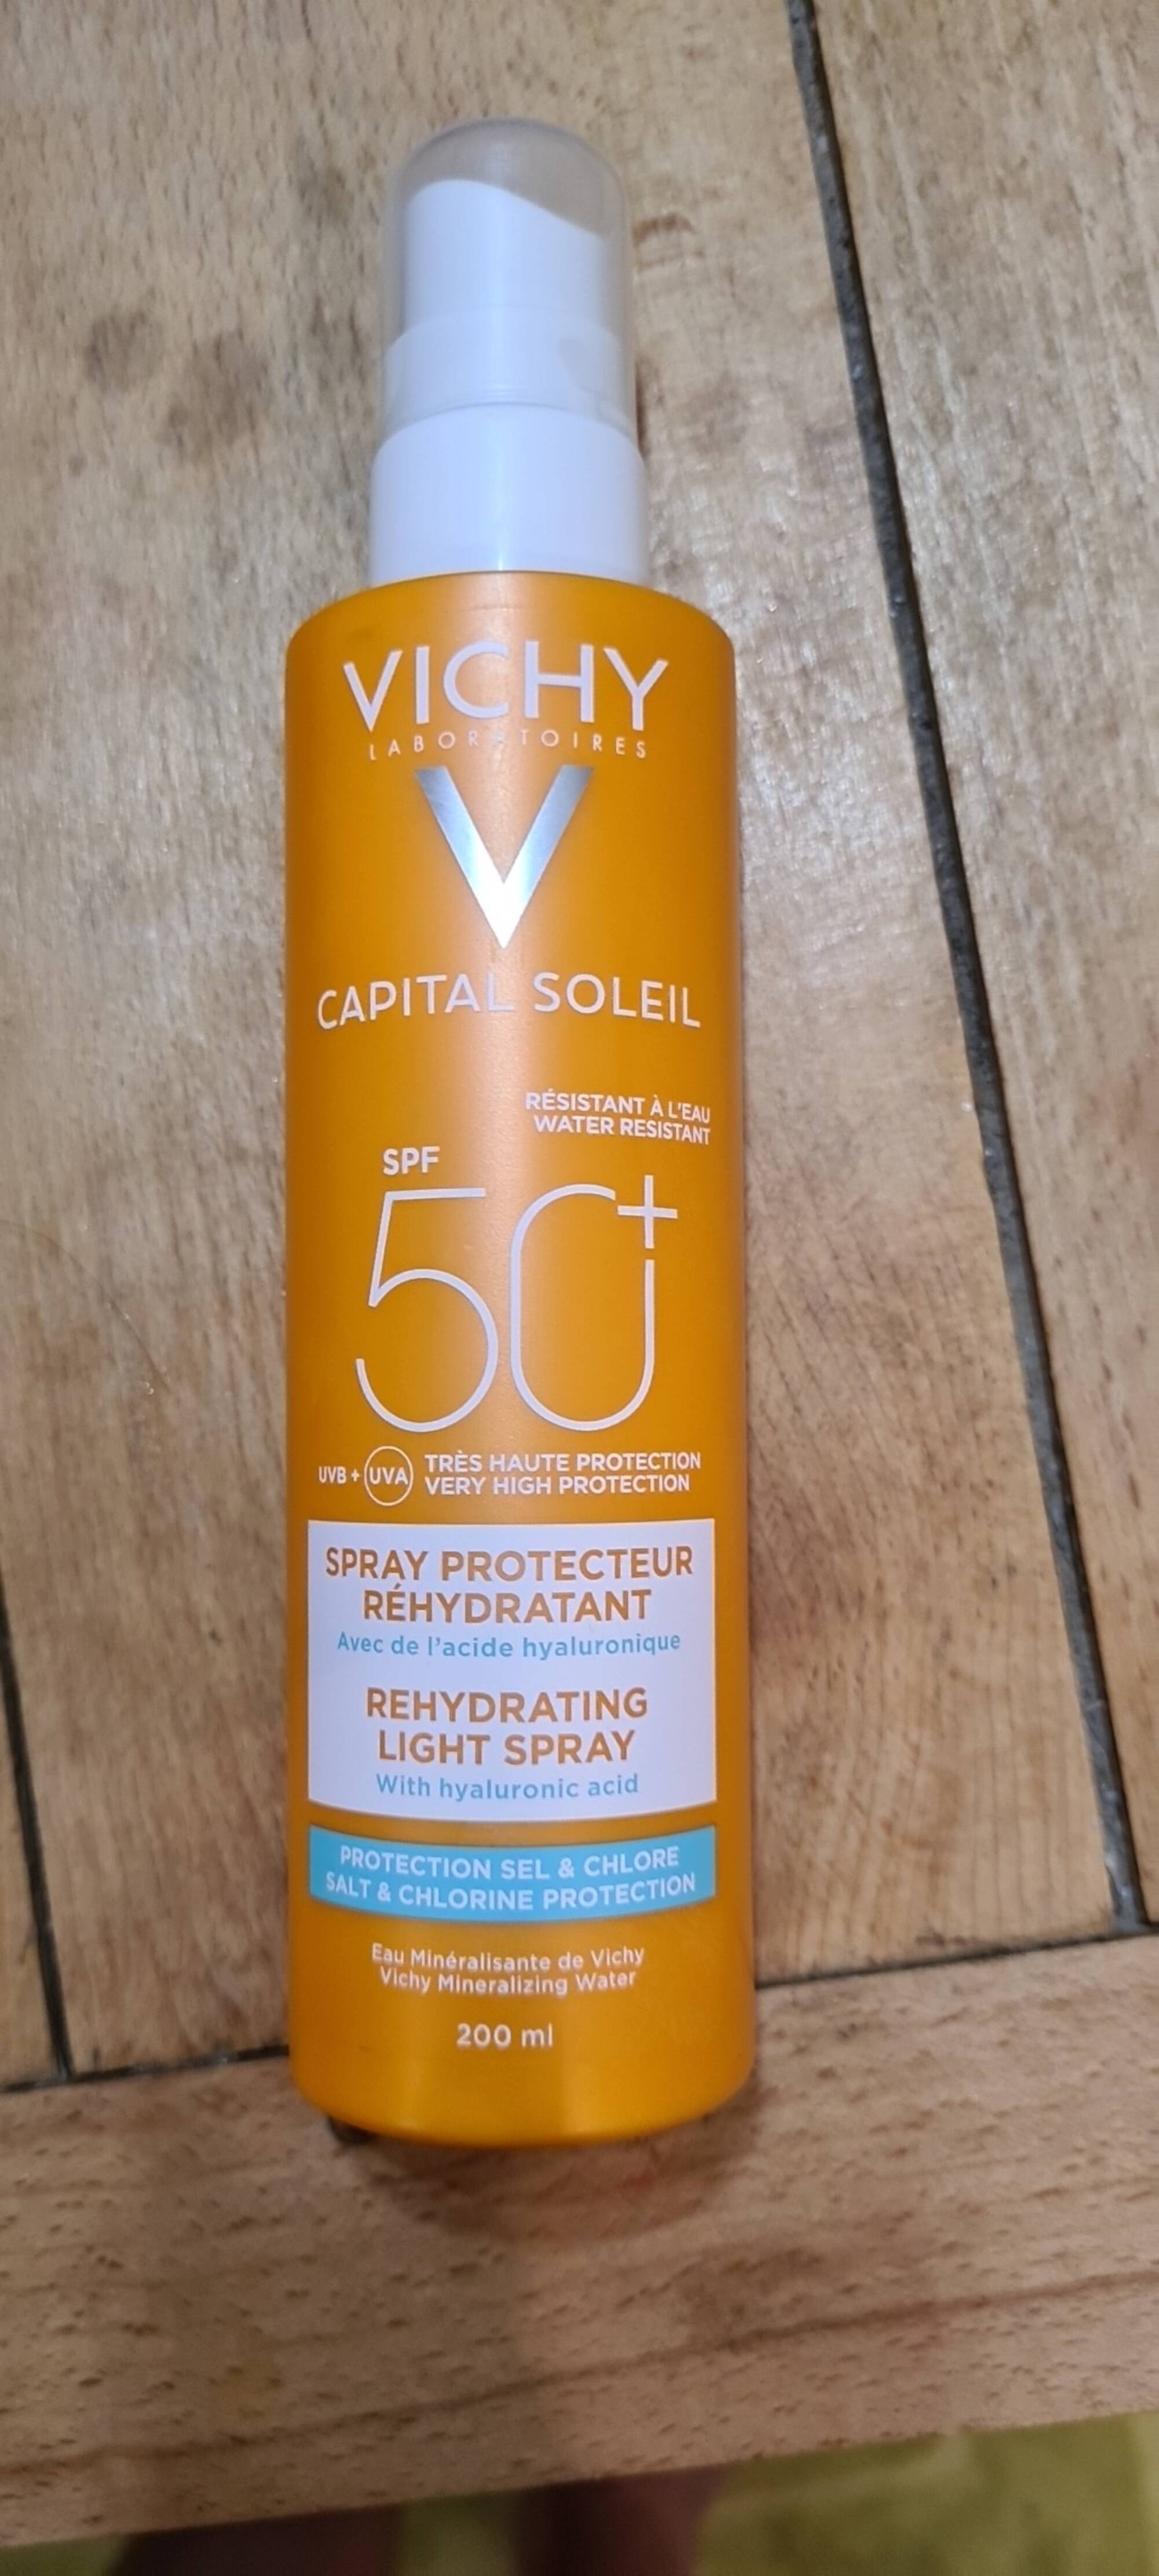 VICHY LABORATOIRES - Capital soleil - Spray protecteur réhydratant spf 50+